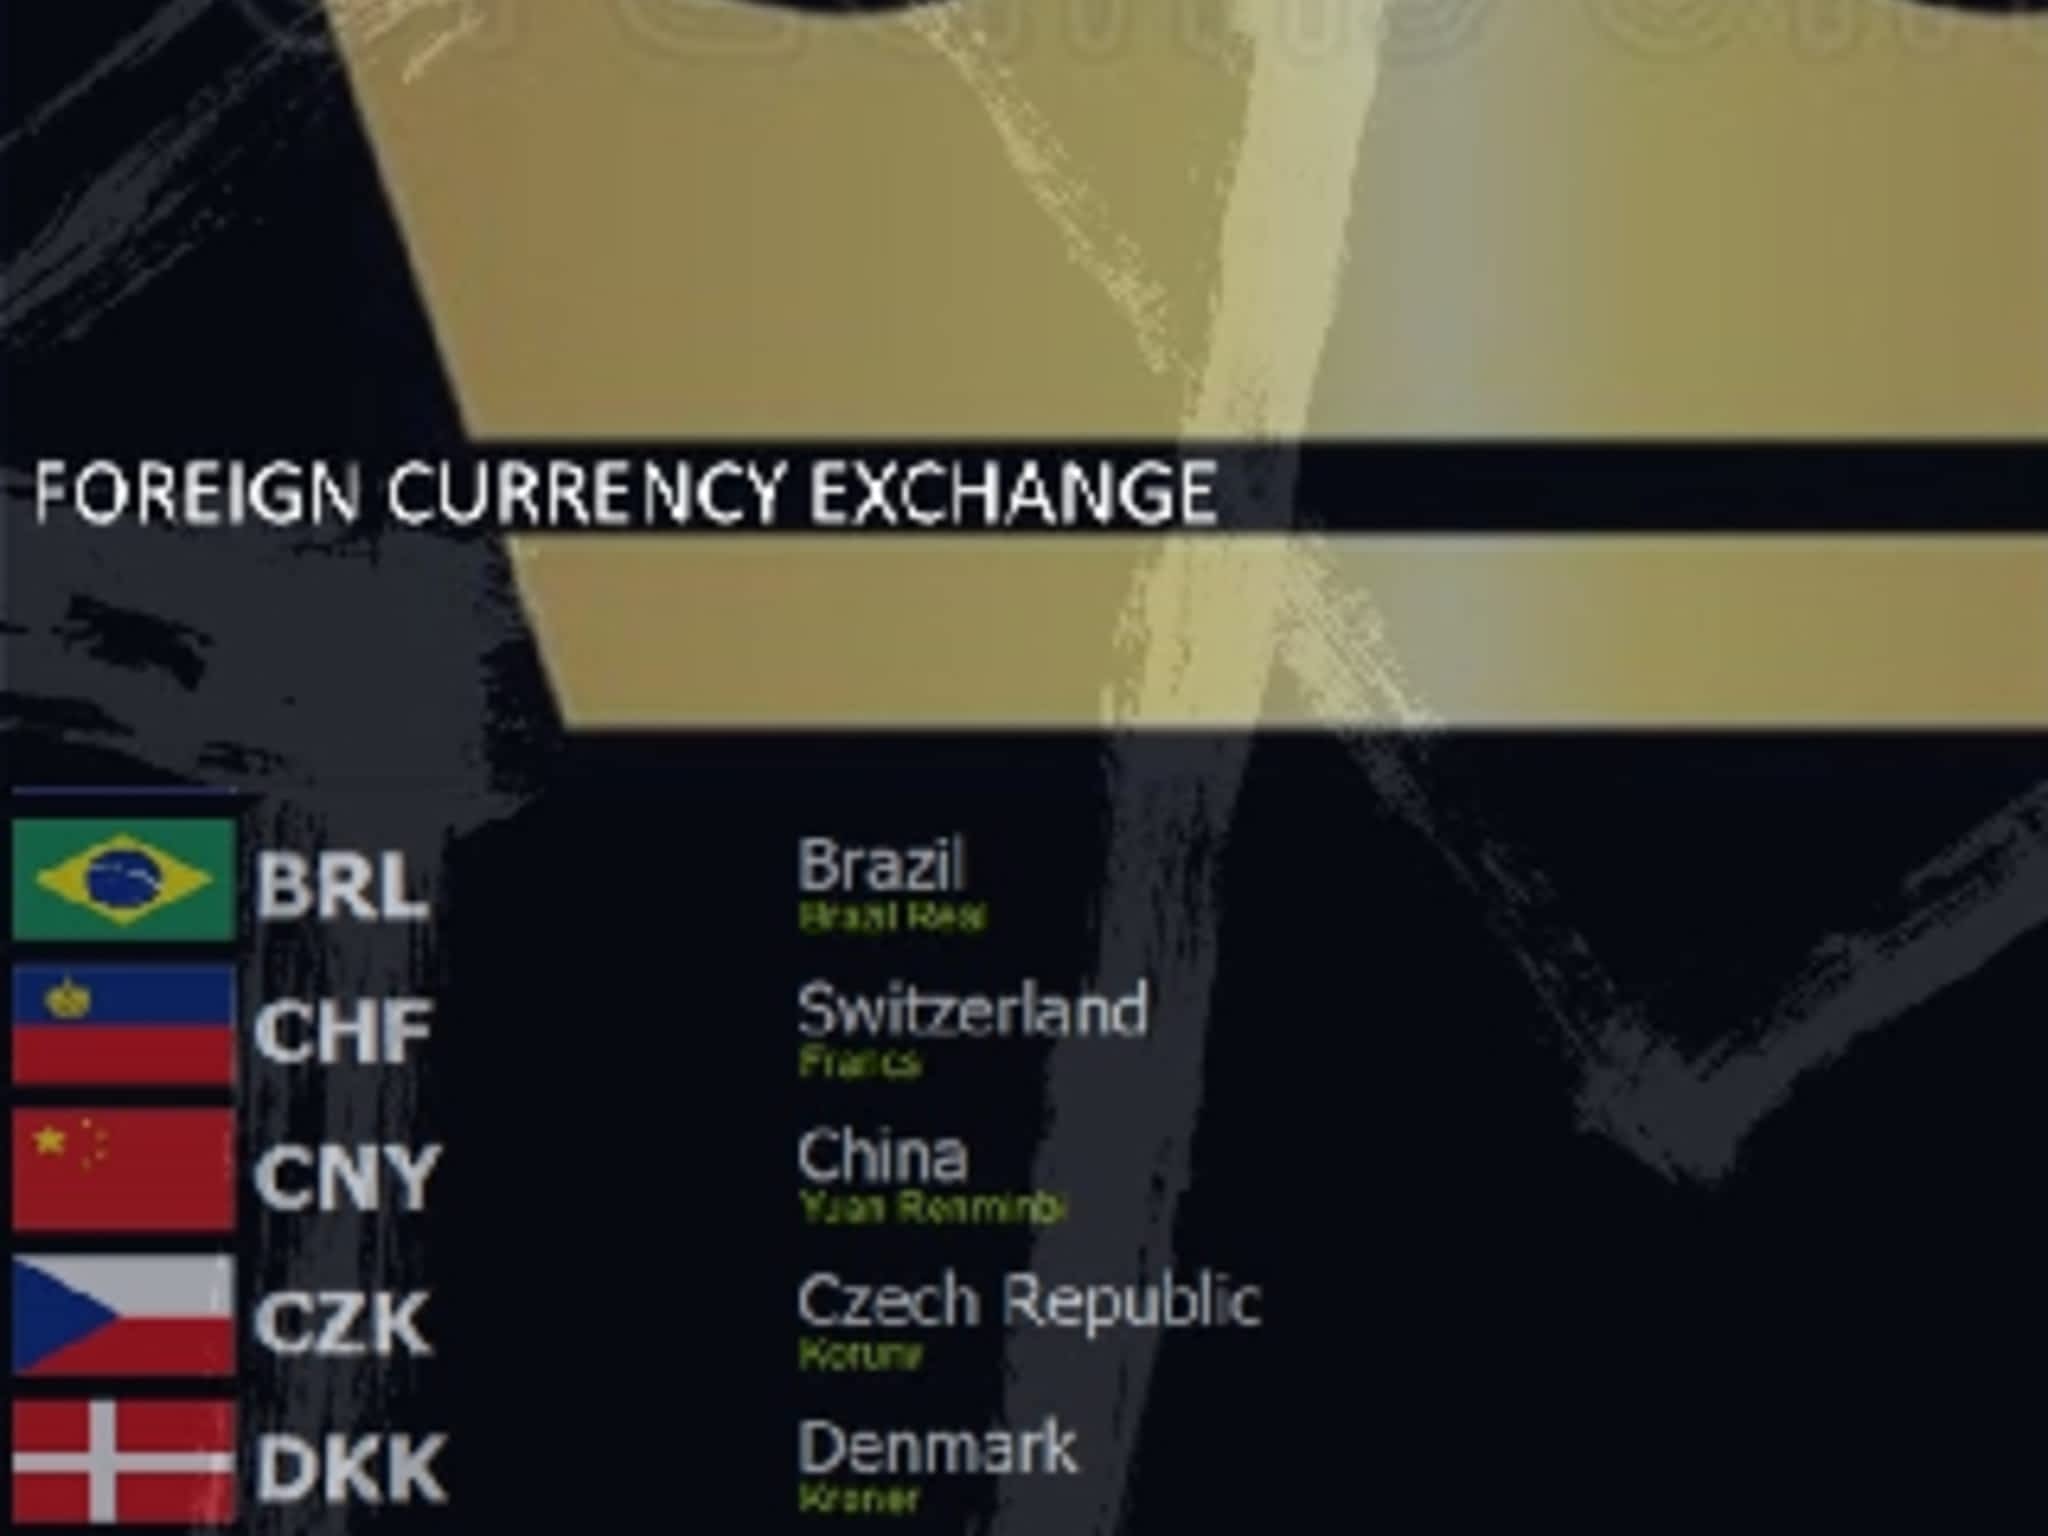 photo United Royal Currency Exchange Ltd